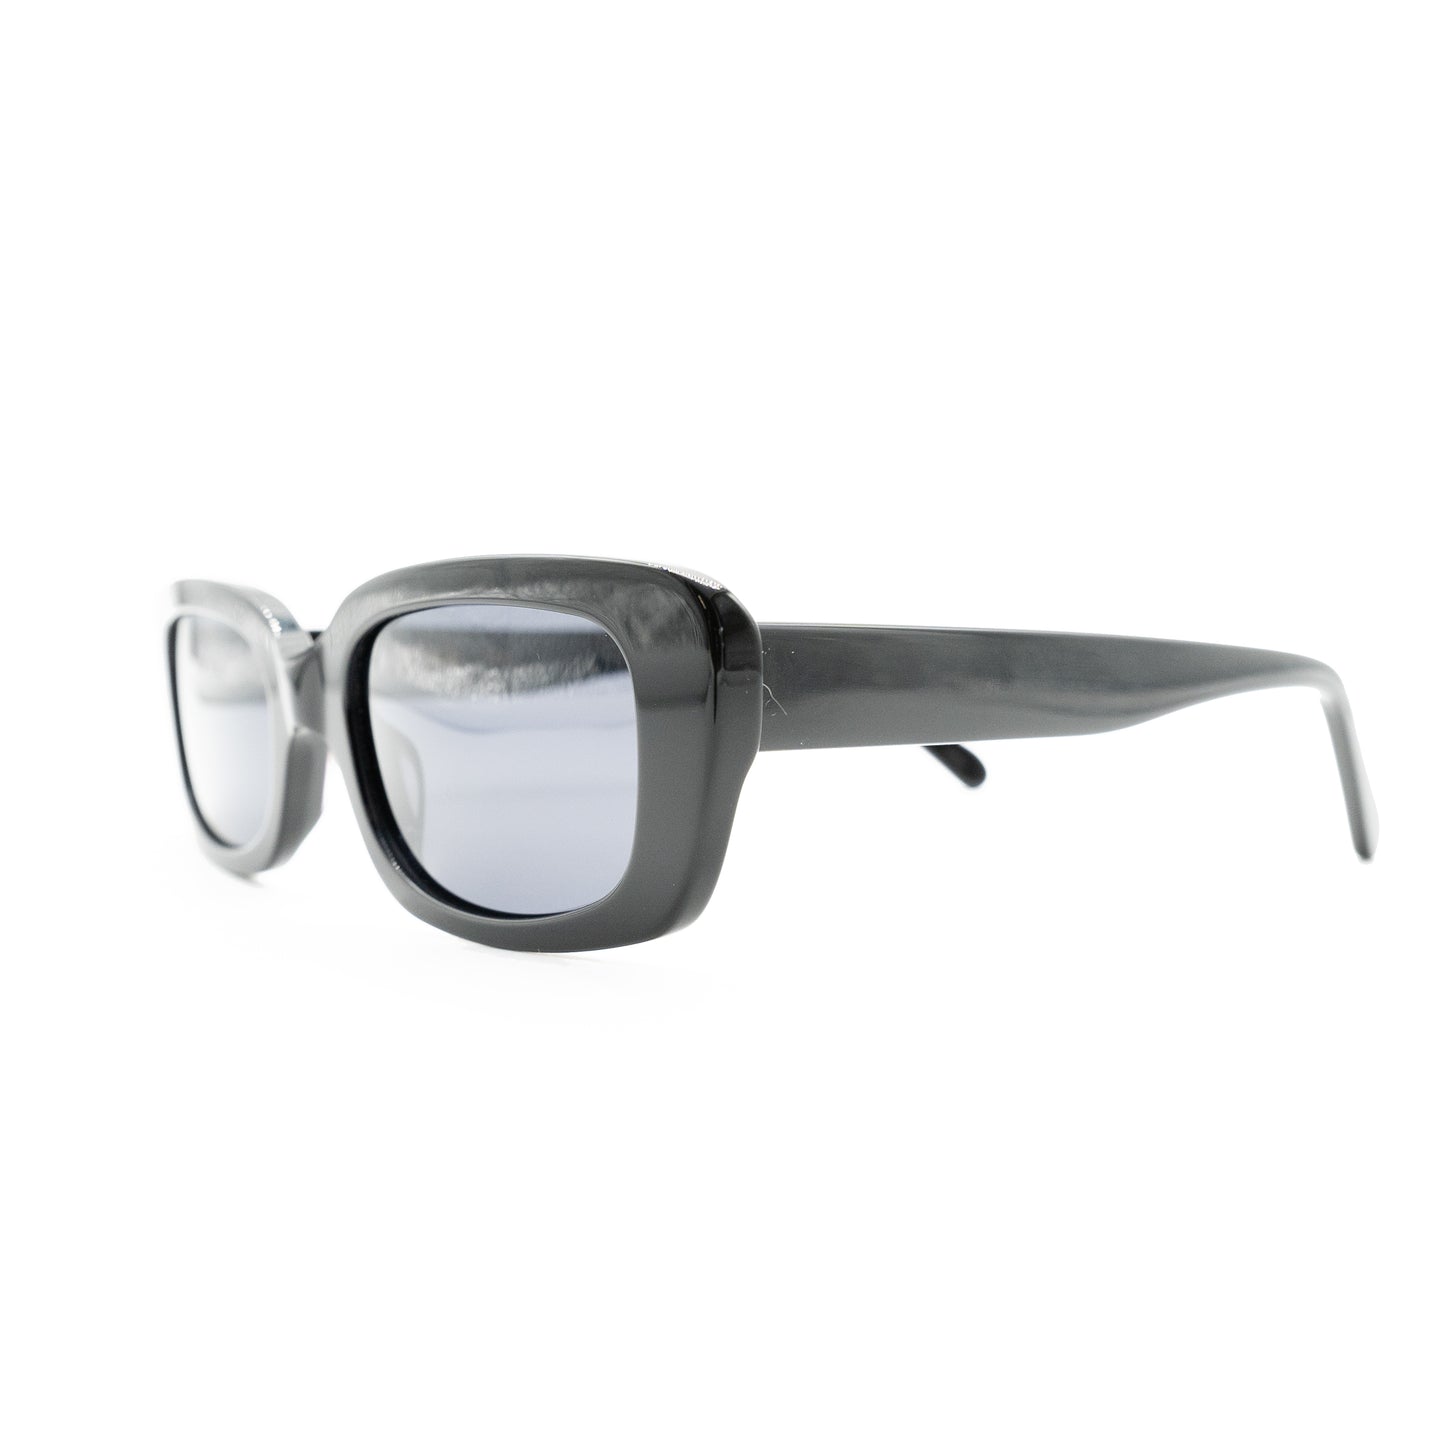 Ensea Sunglasses: Clementine: Black with Grey Lens